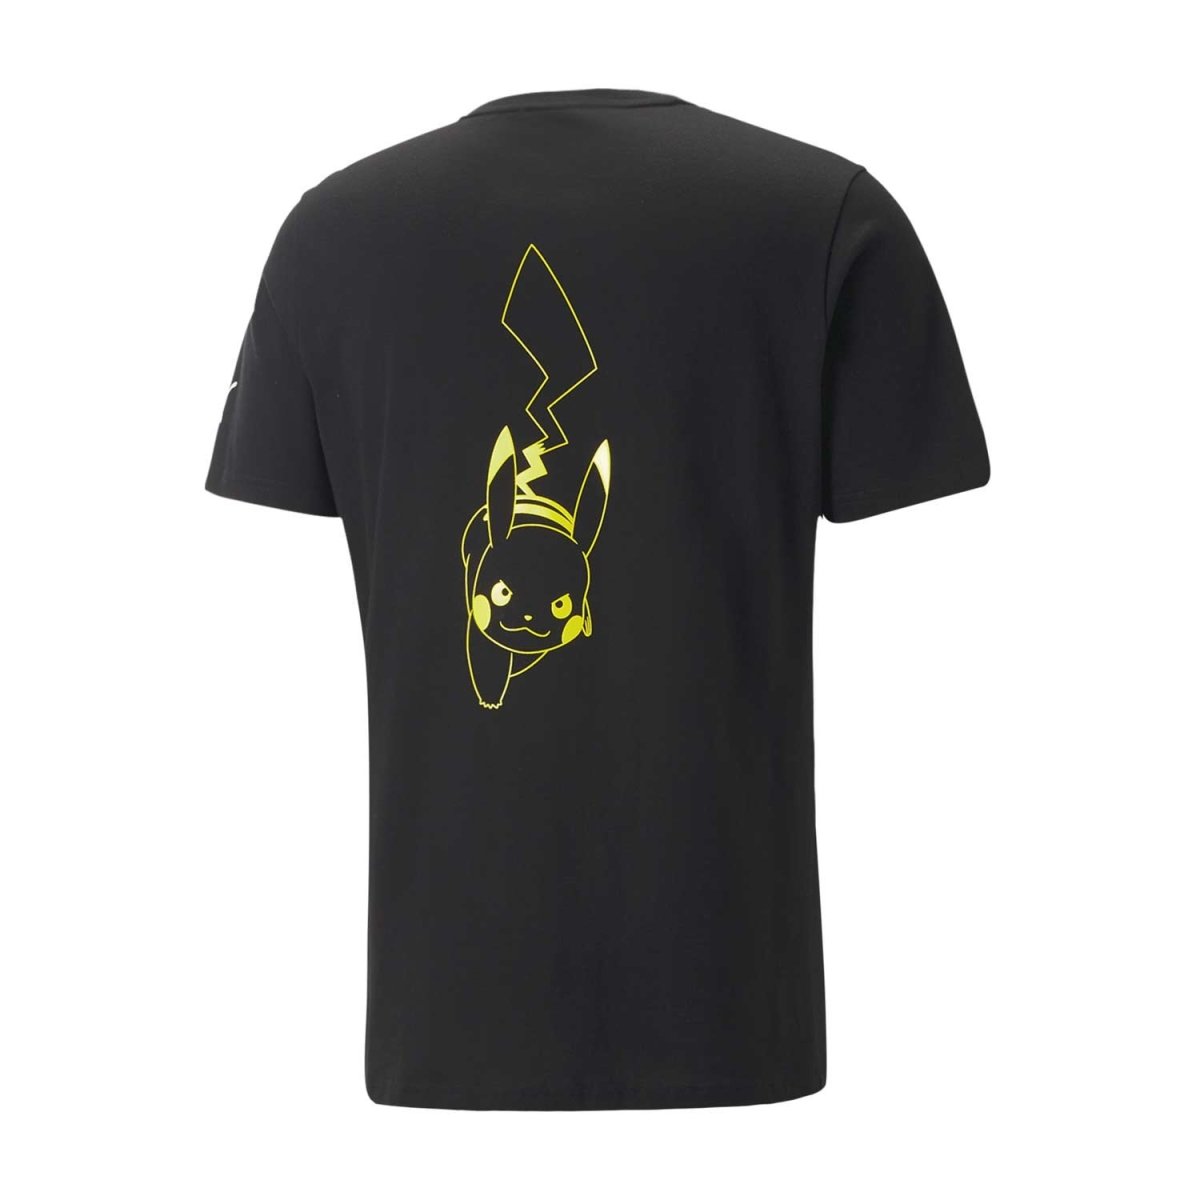 PUMA × Pokémon: Pikachu Puma Black Jersey T-Shirt - Adult